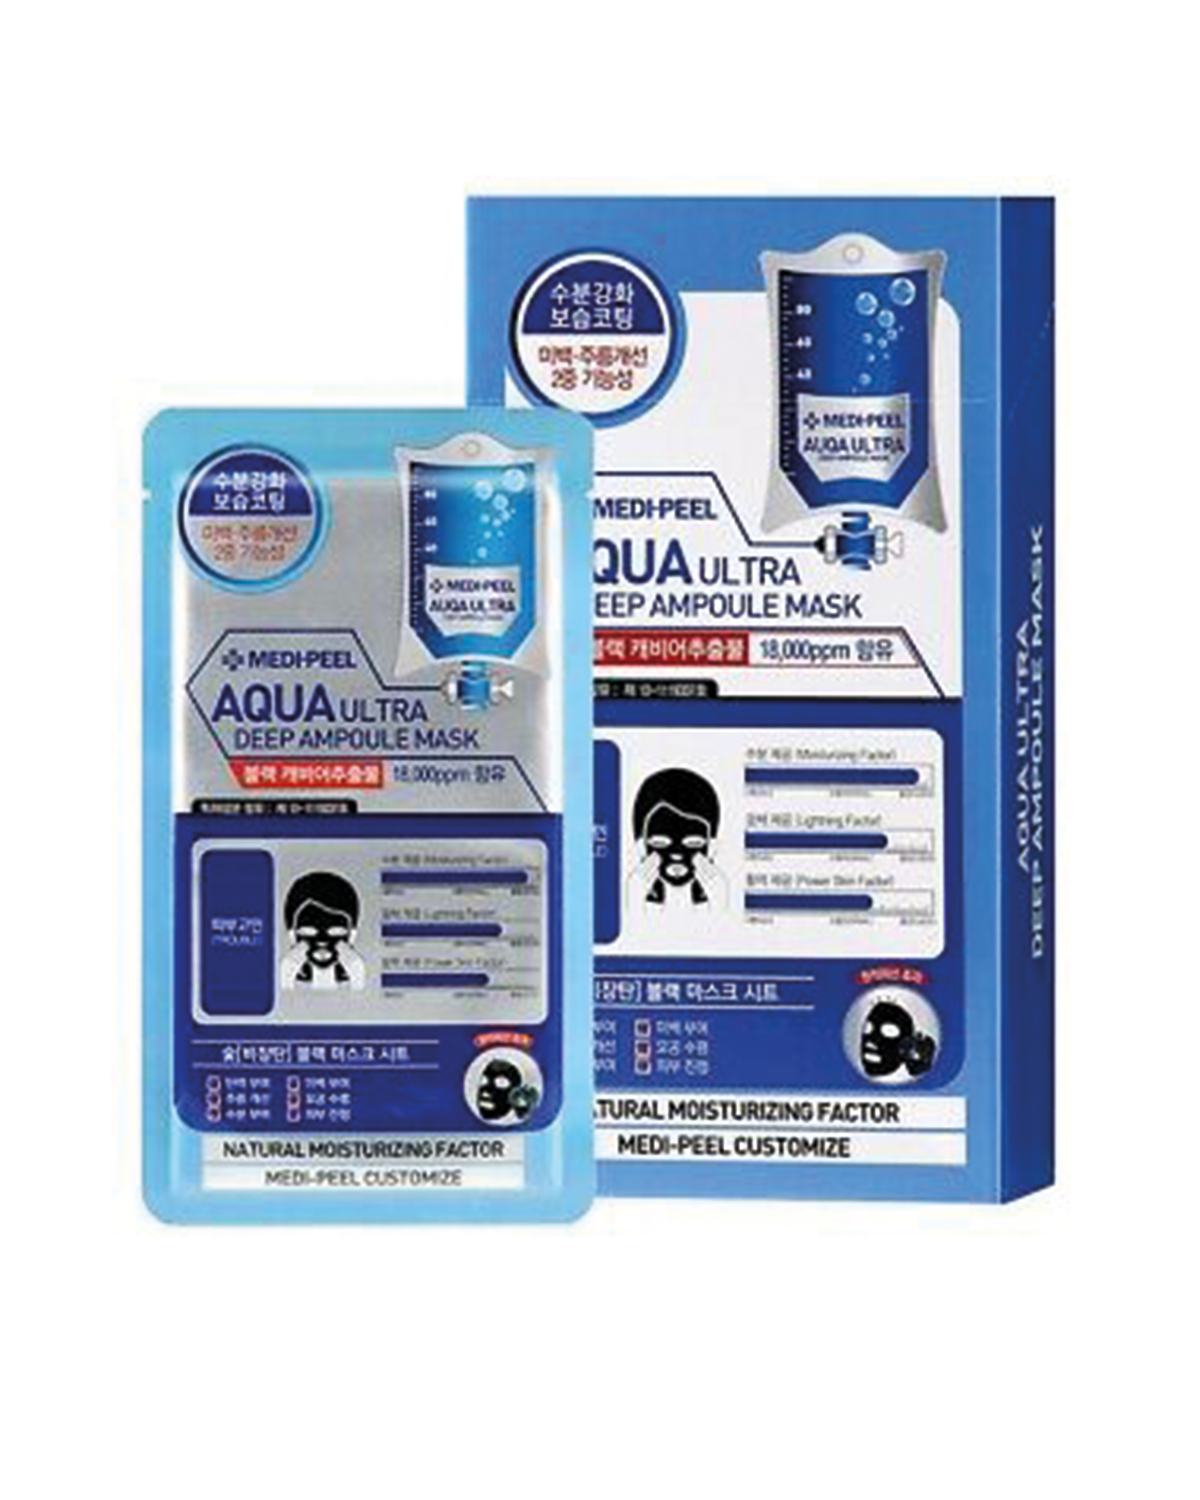 MEDI-PEEL Aqua Ultra Deep Ampoule Mask Sheet 25 g x 10 ea